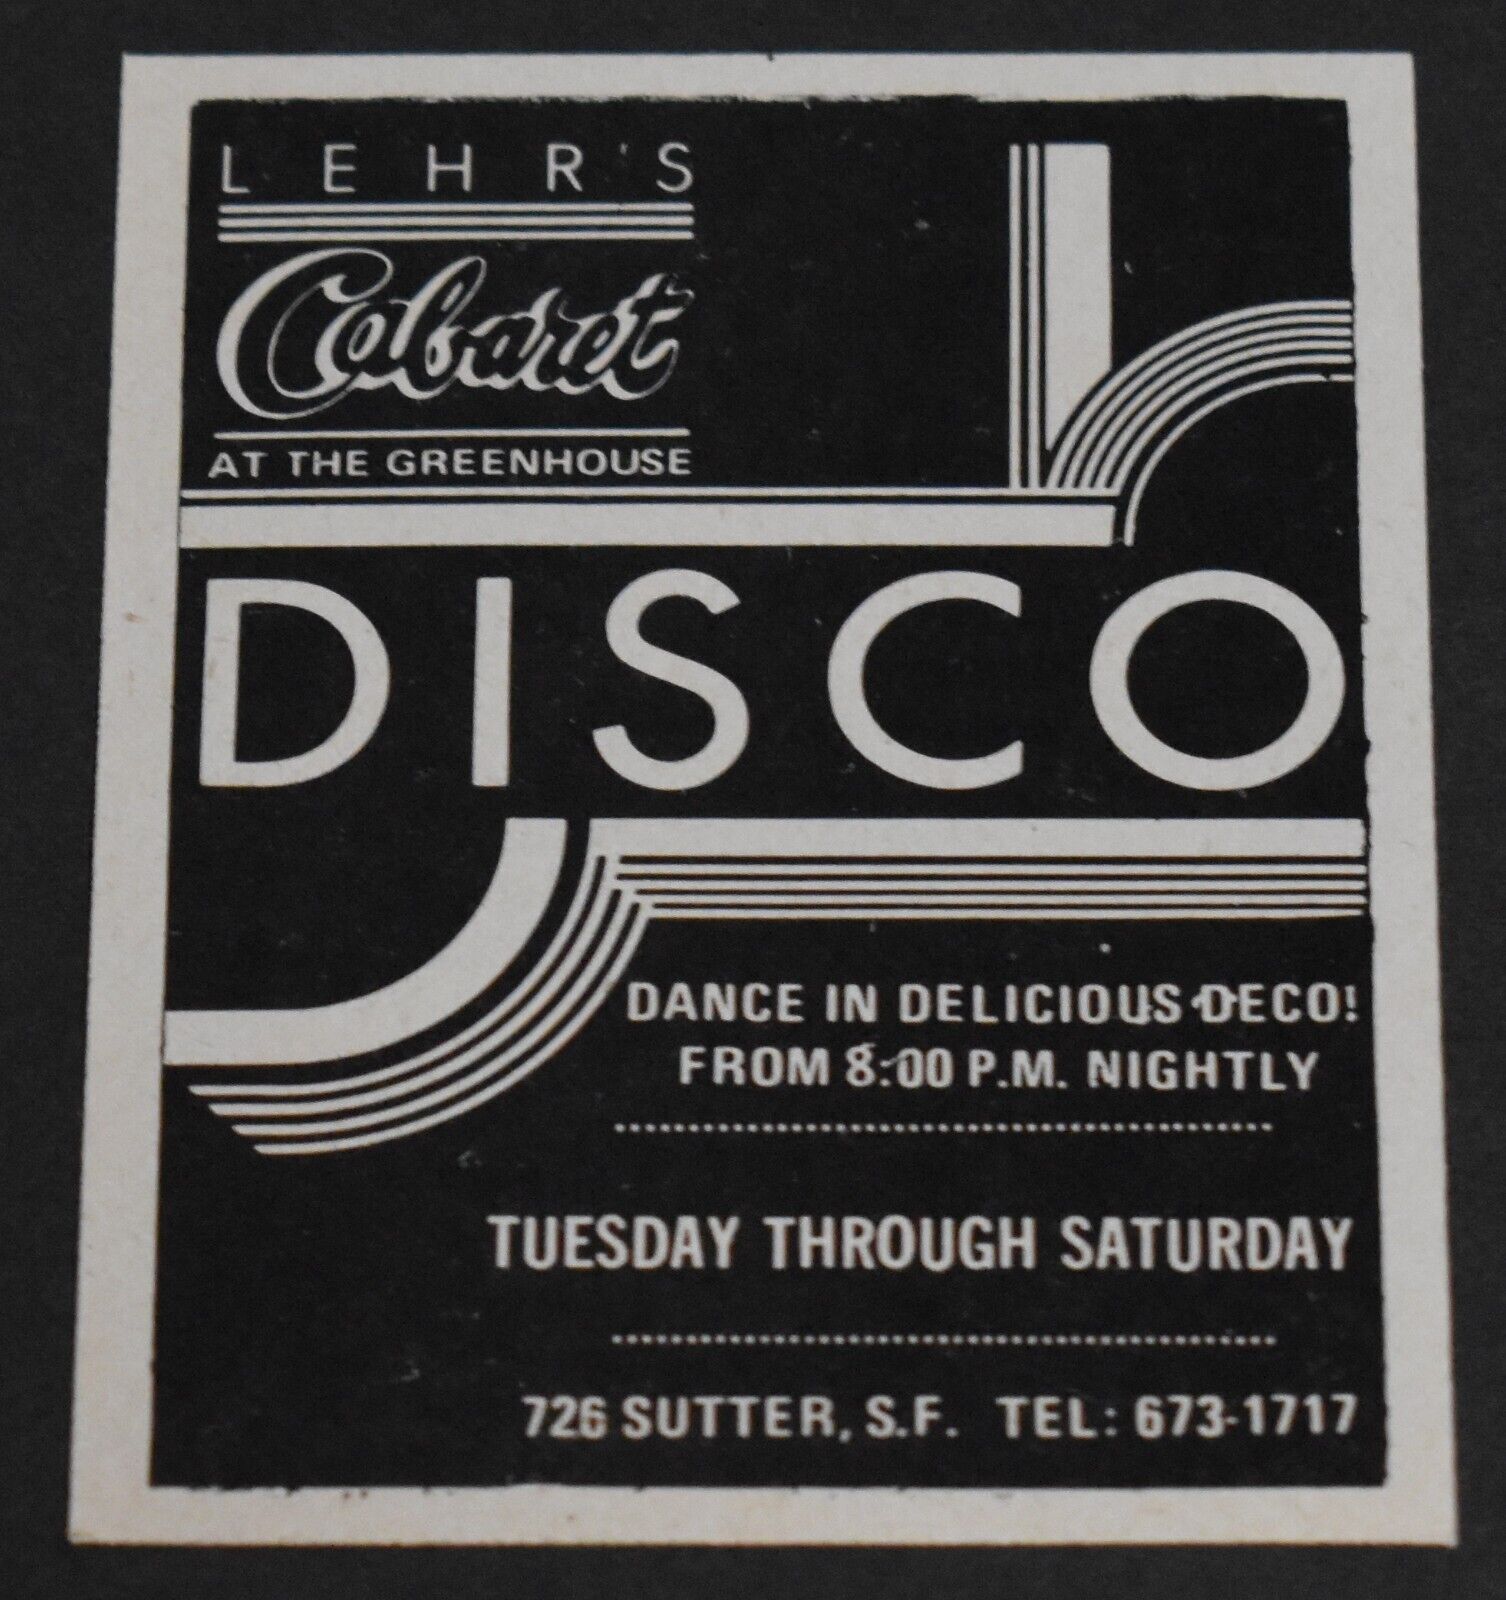 1979 Print Ad San Francisco Lehr\'s Cabaret at the Greenhouse Disco Dance Art